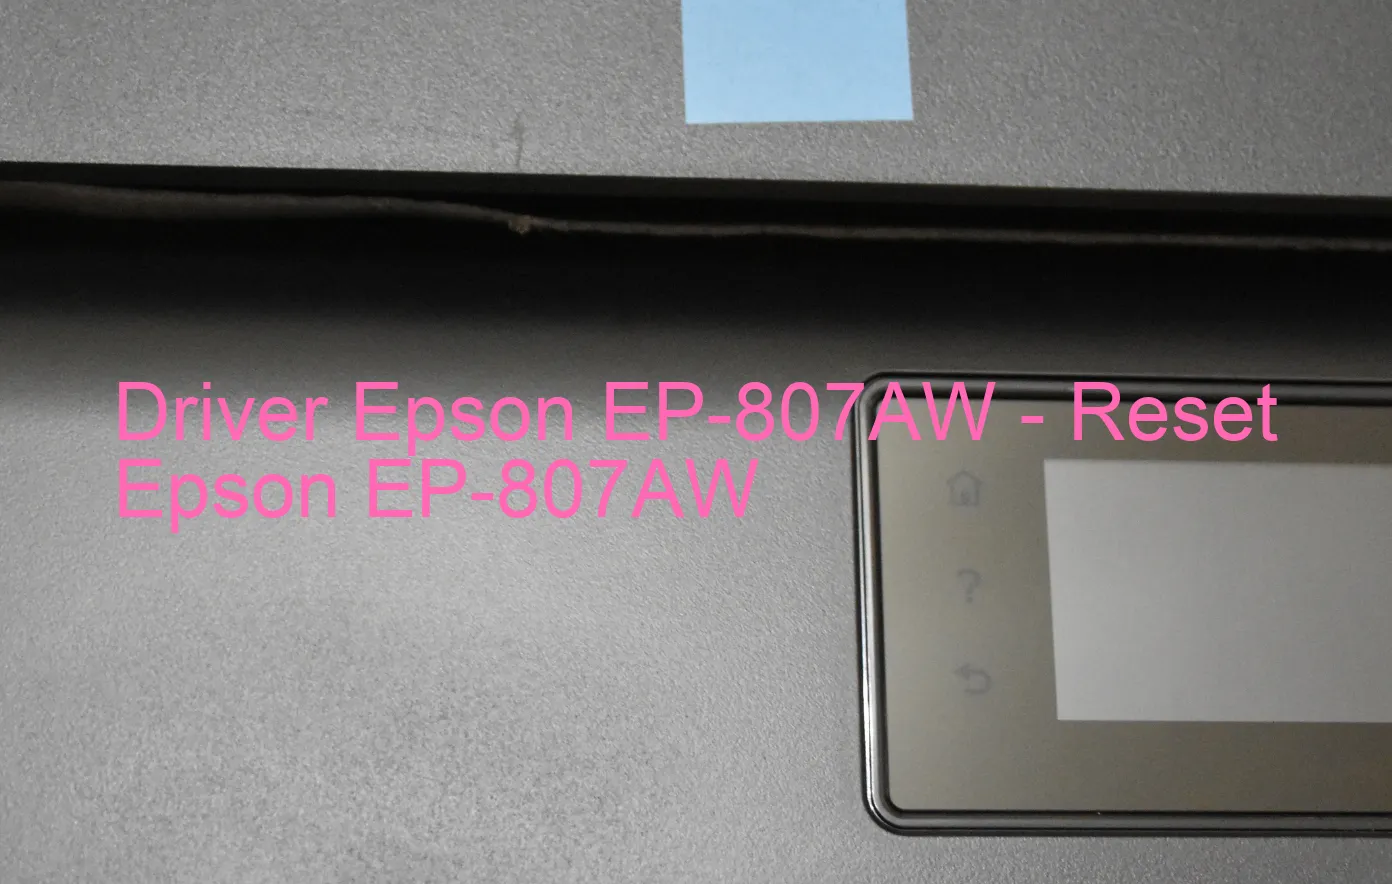 Epson EP-807AWのドライバー、Epson EP-807AWのリセットソフトウェア